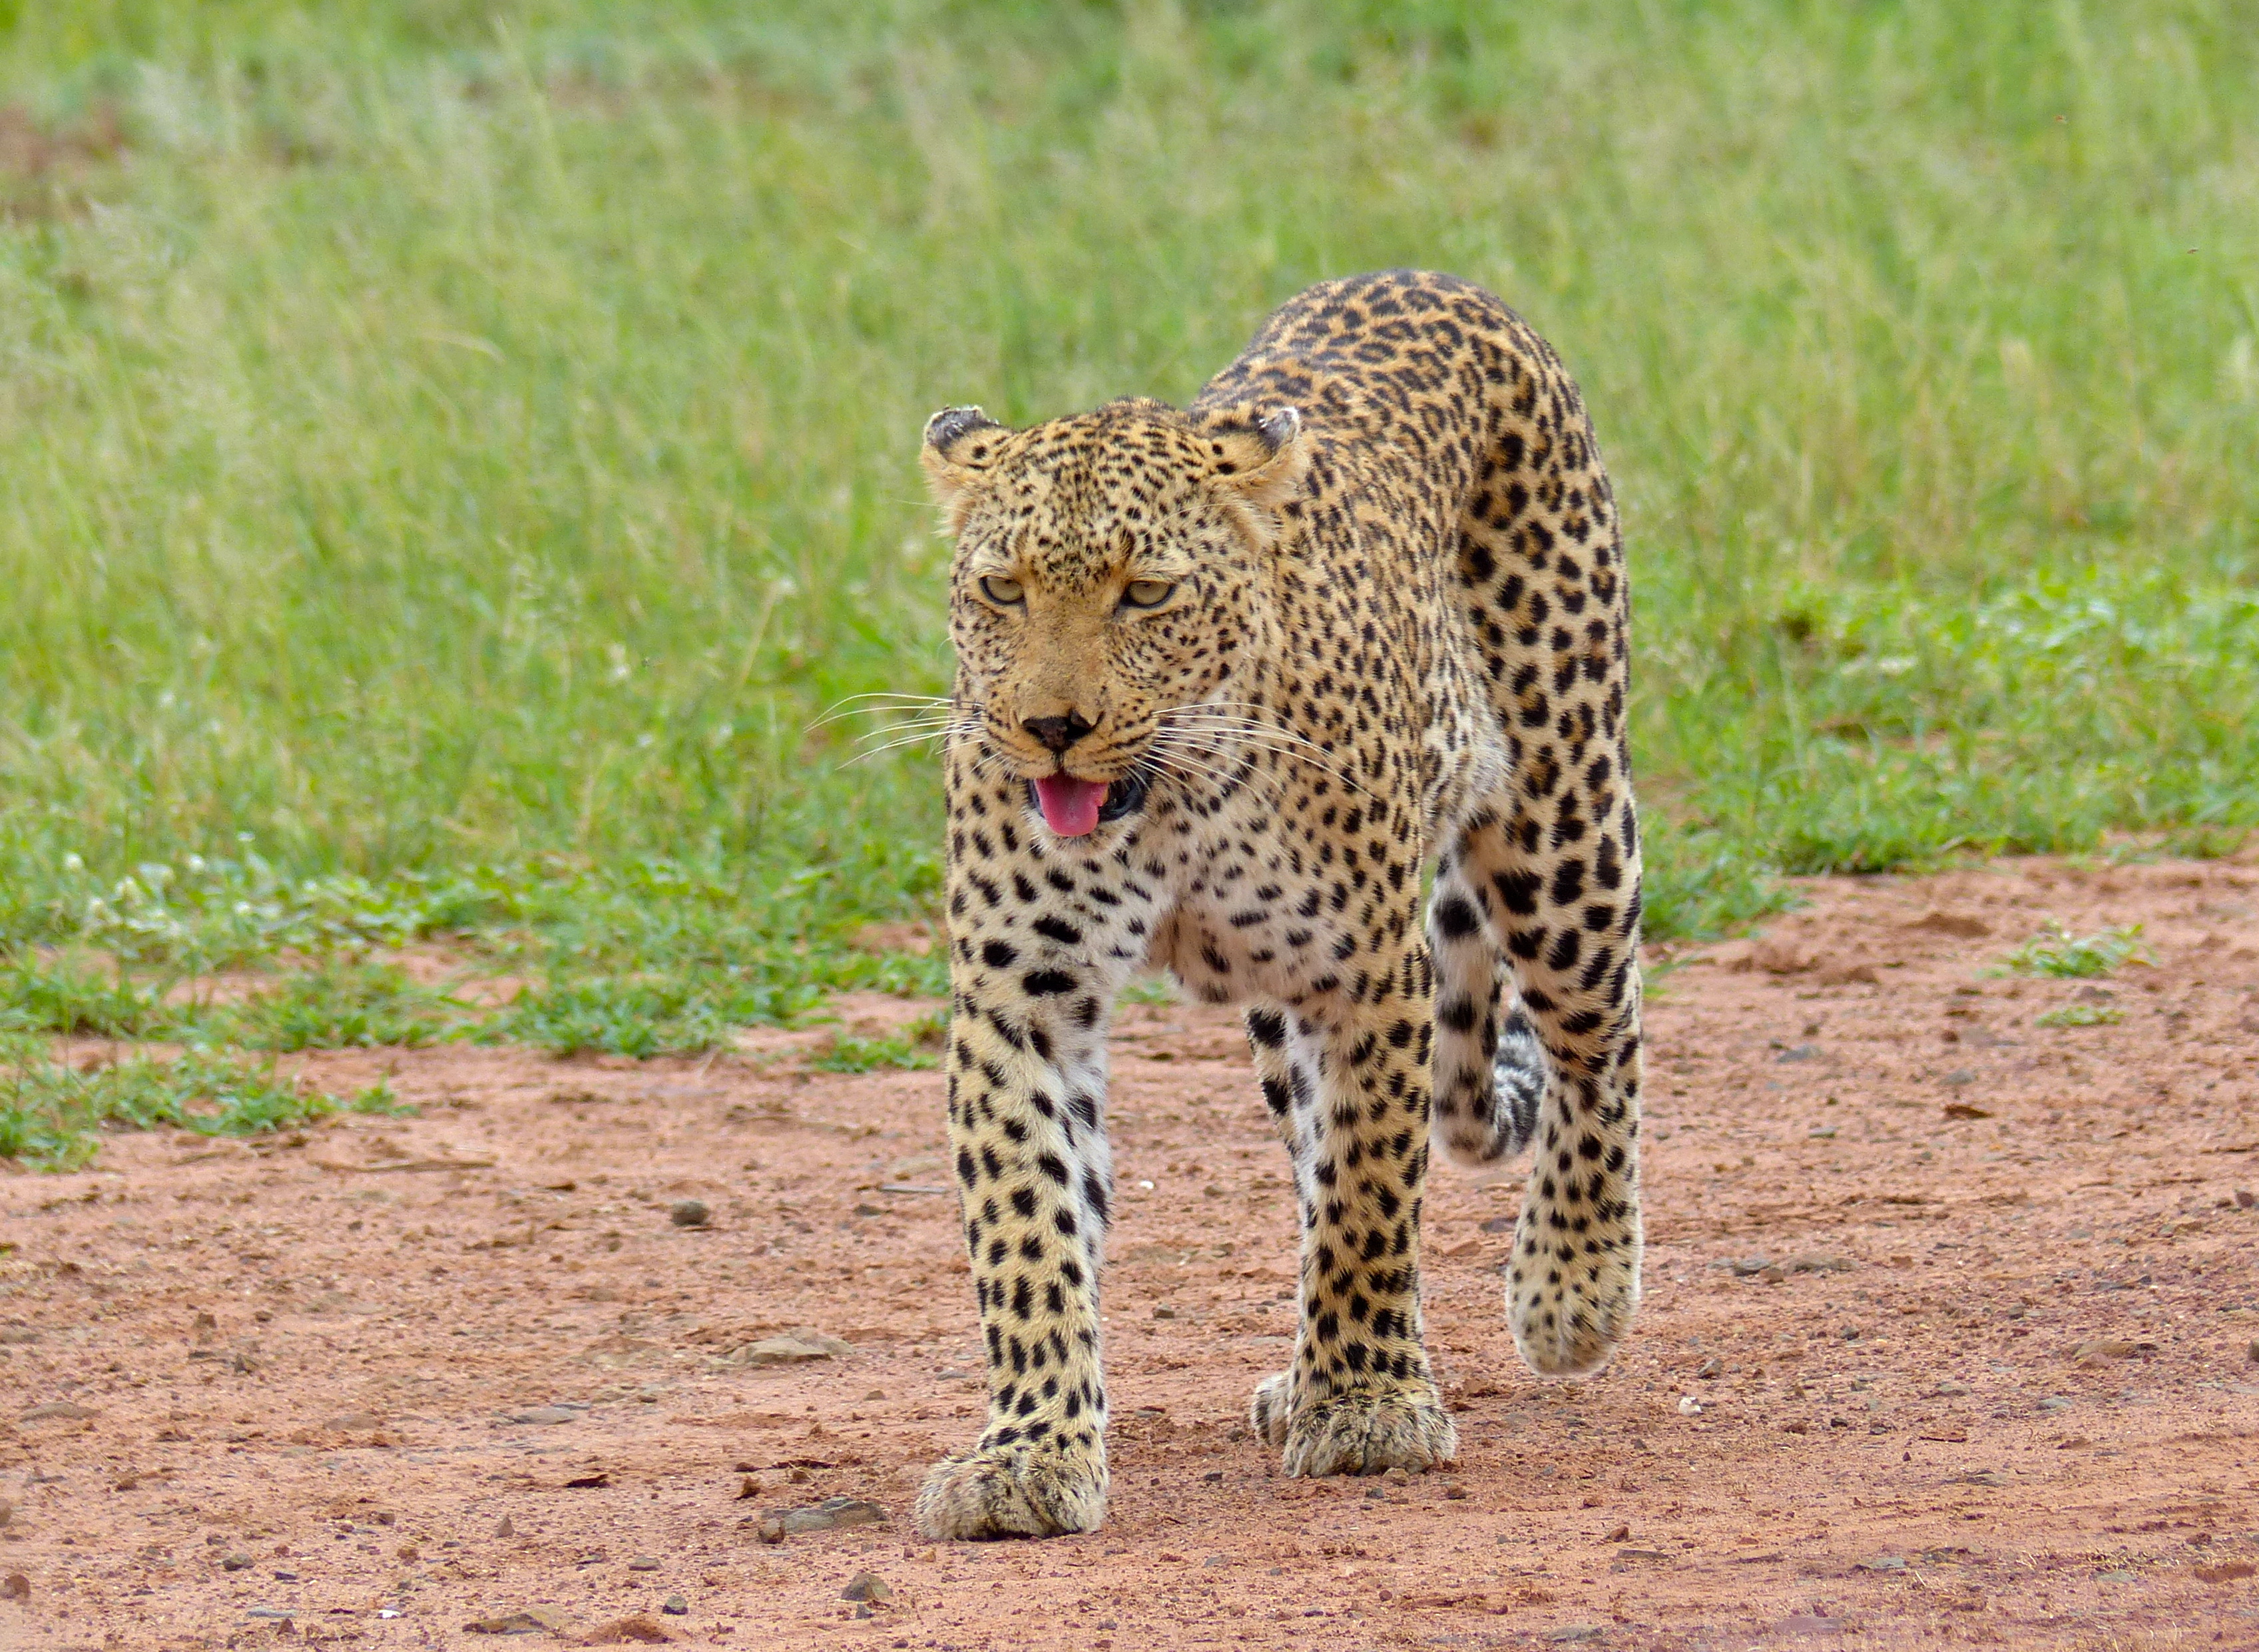 Leopard (Panthera pardus) female (13901064692).jpg